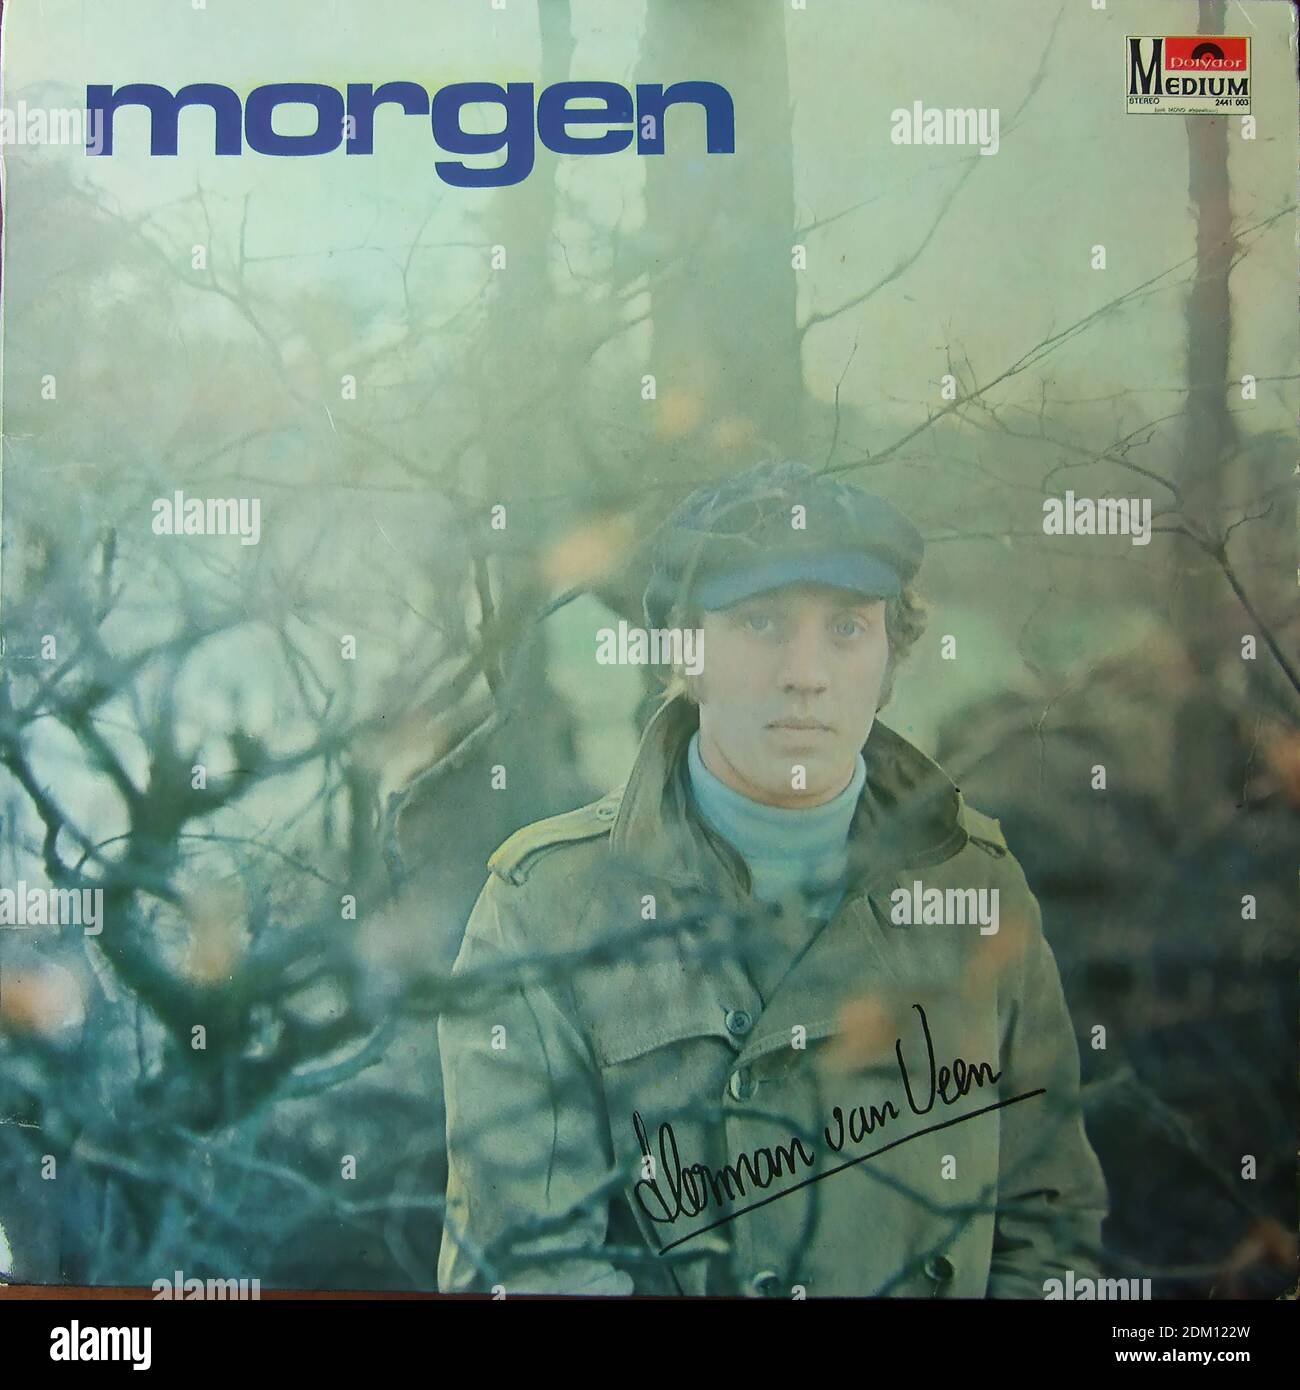 Herman van Veen - Morgen, Polydor - copertina di album in vinile d'epoca Foto Stock